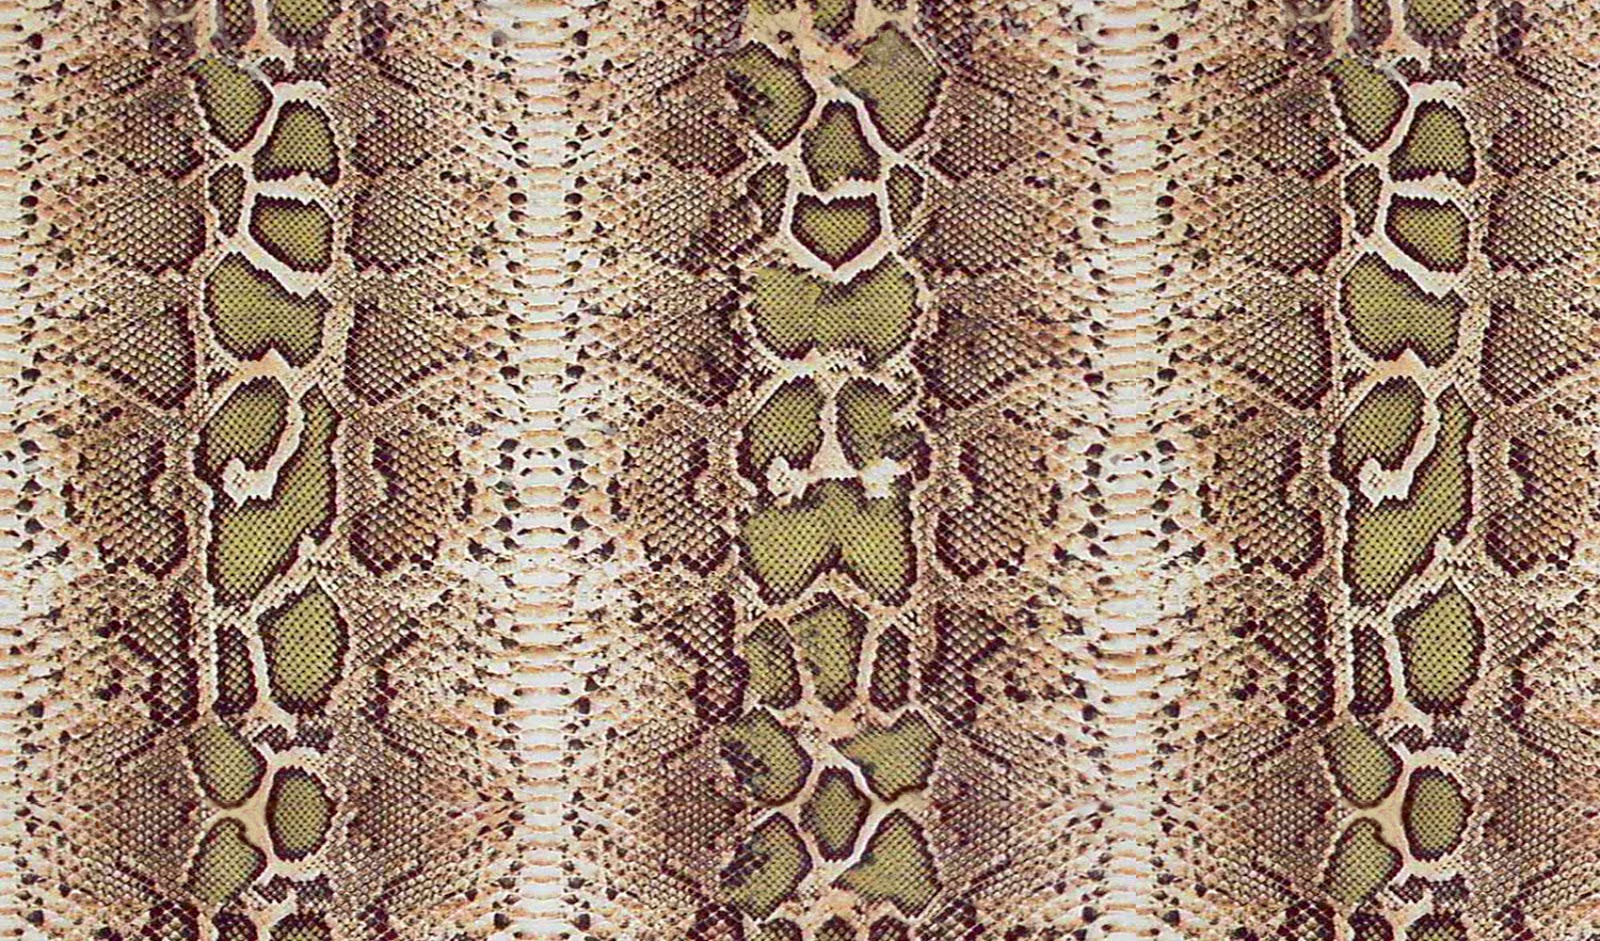 Snake Print New Hd Wallpaper HD Wallpapers Download Free Map Images Wallpaper [wallpaper376.blogspot.com]